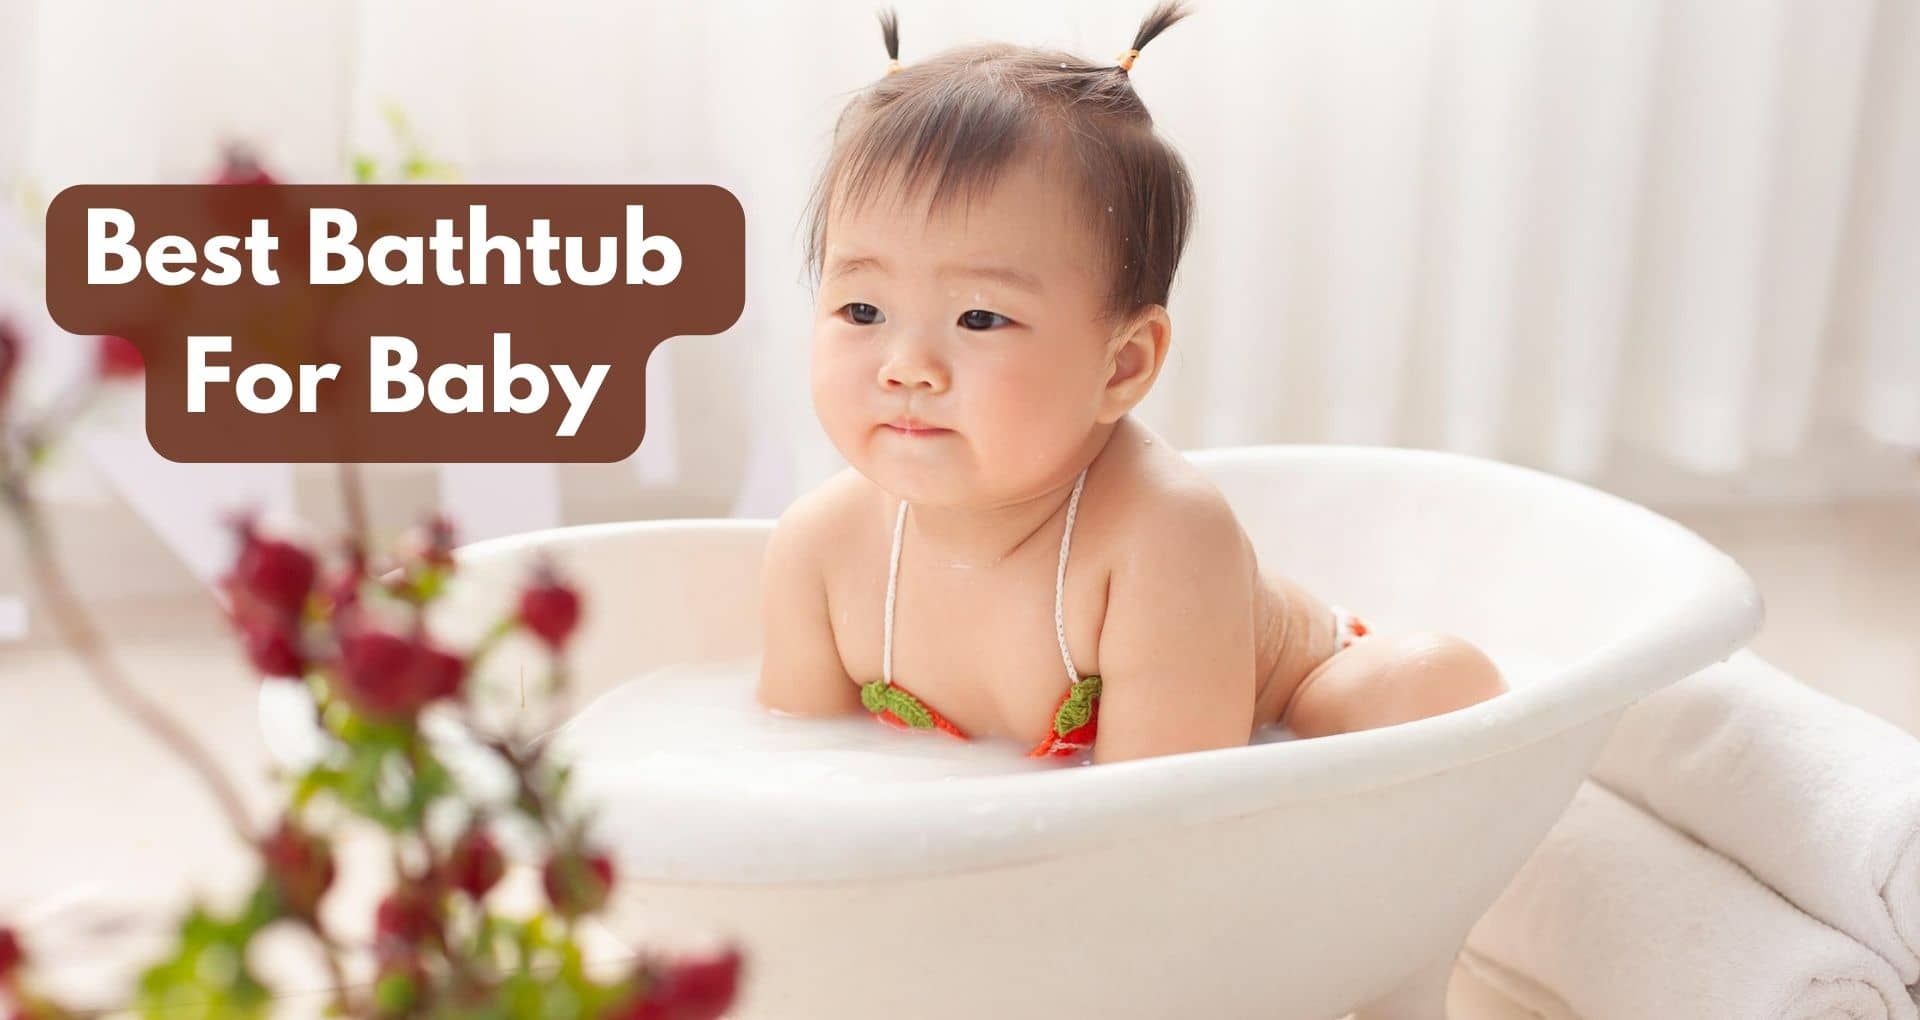 Best Bathtub For Baby?